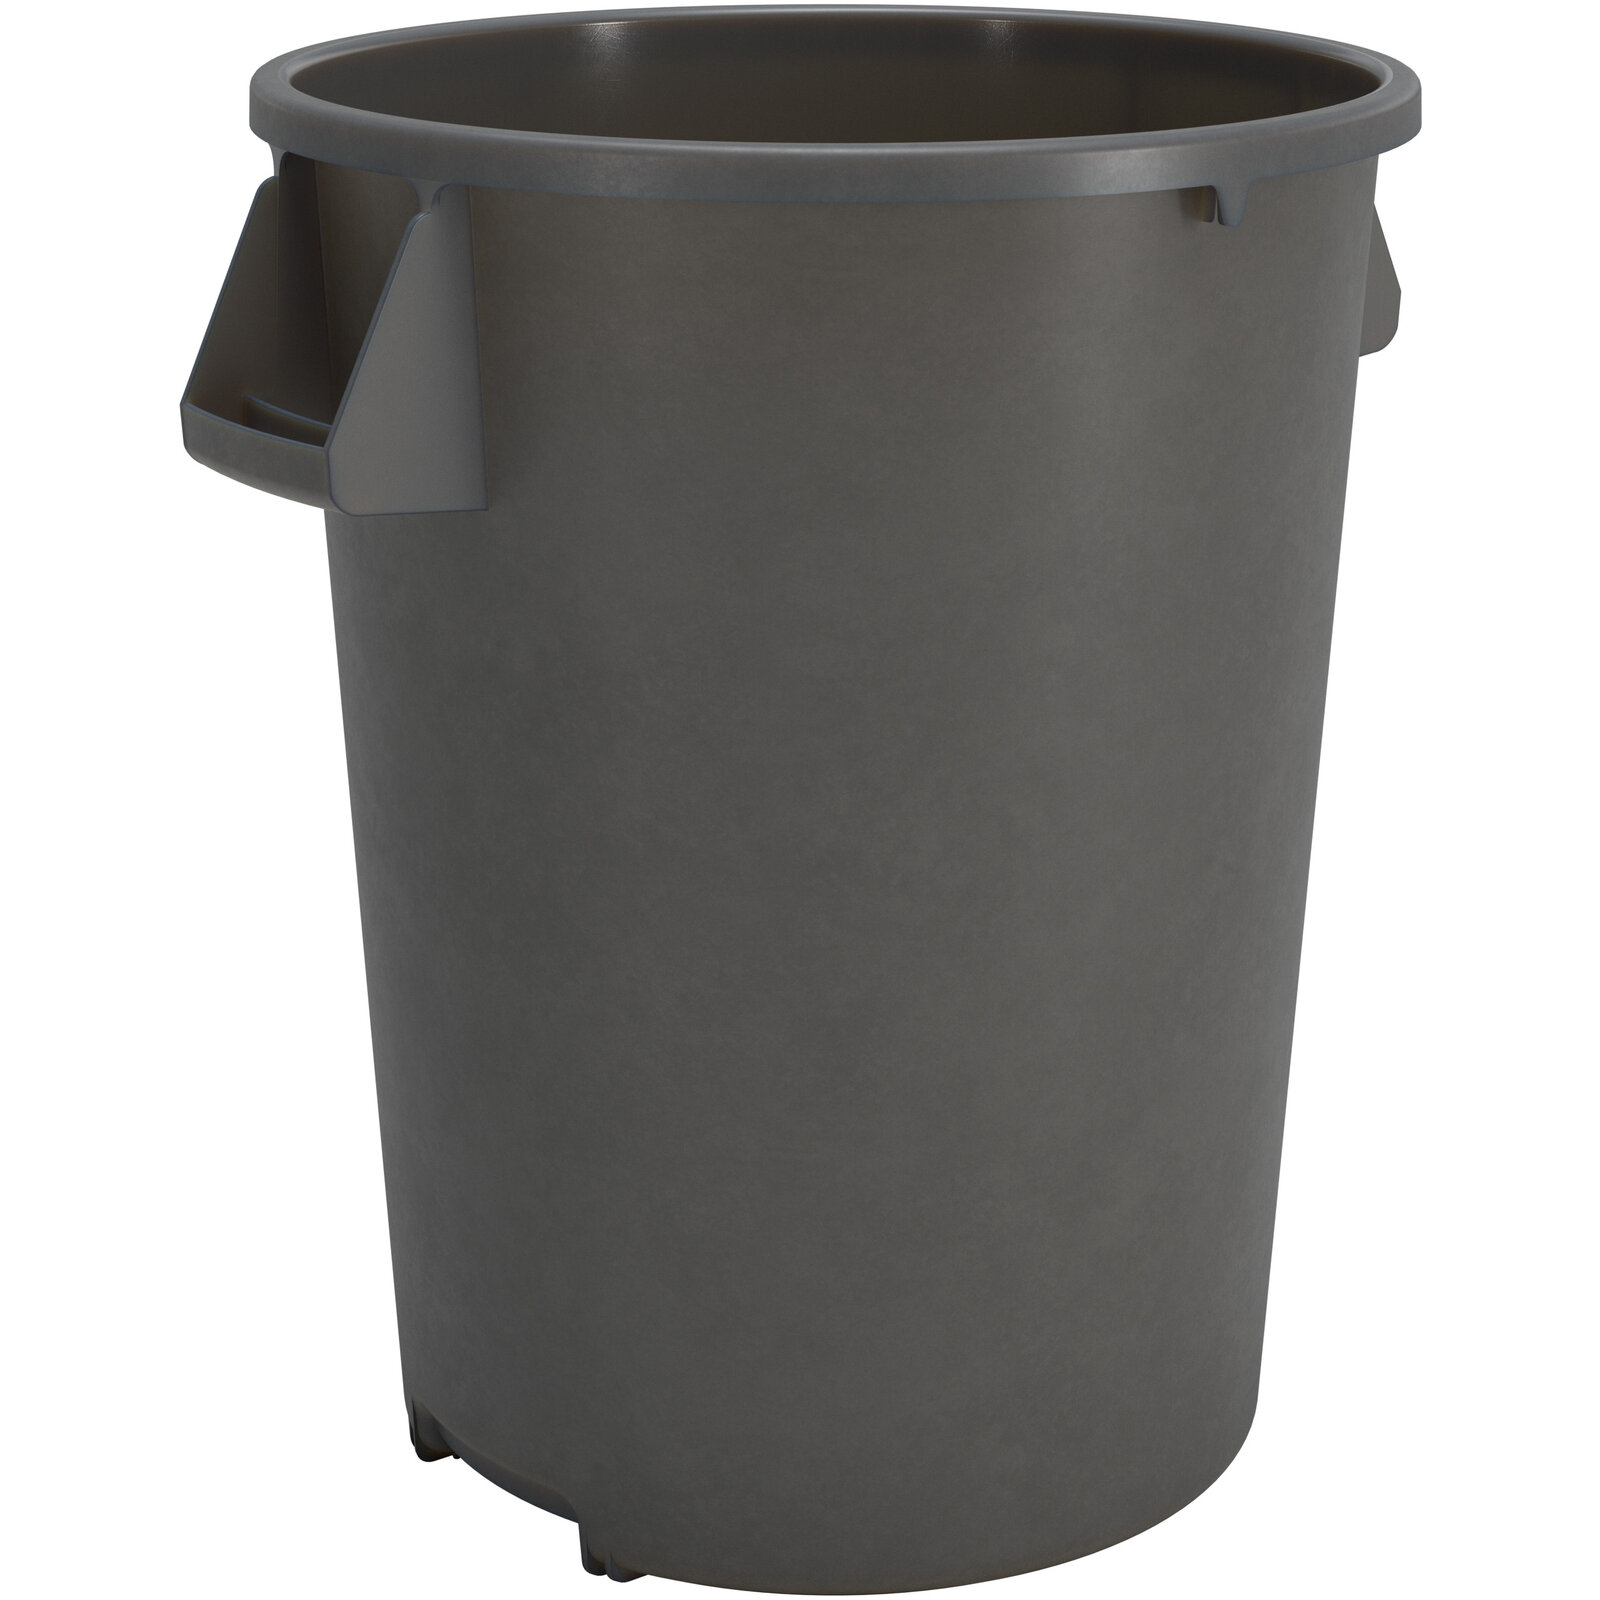 84102026 - Bronco™ Round Waste Bin Trash Container 20 Gallon - Bright Pink